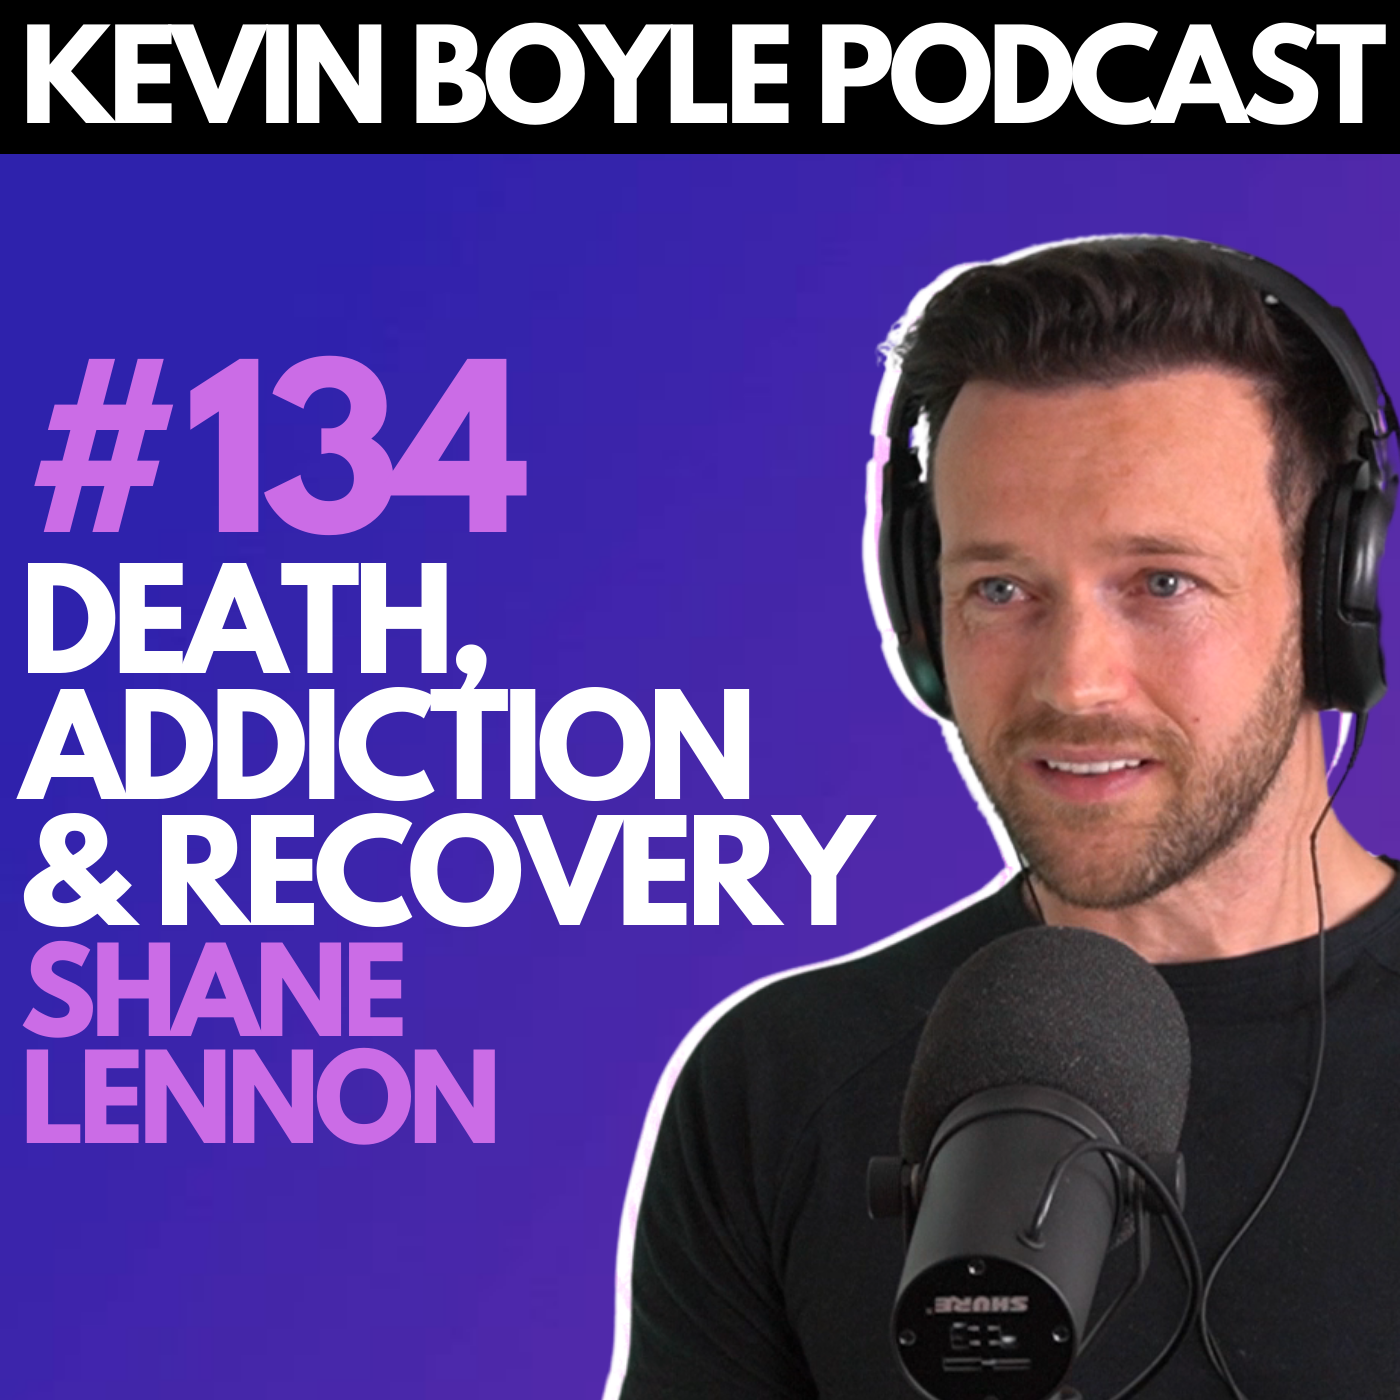 #134: Shane Lennon - Death, Addiction & Recovery.